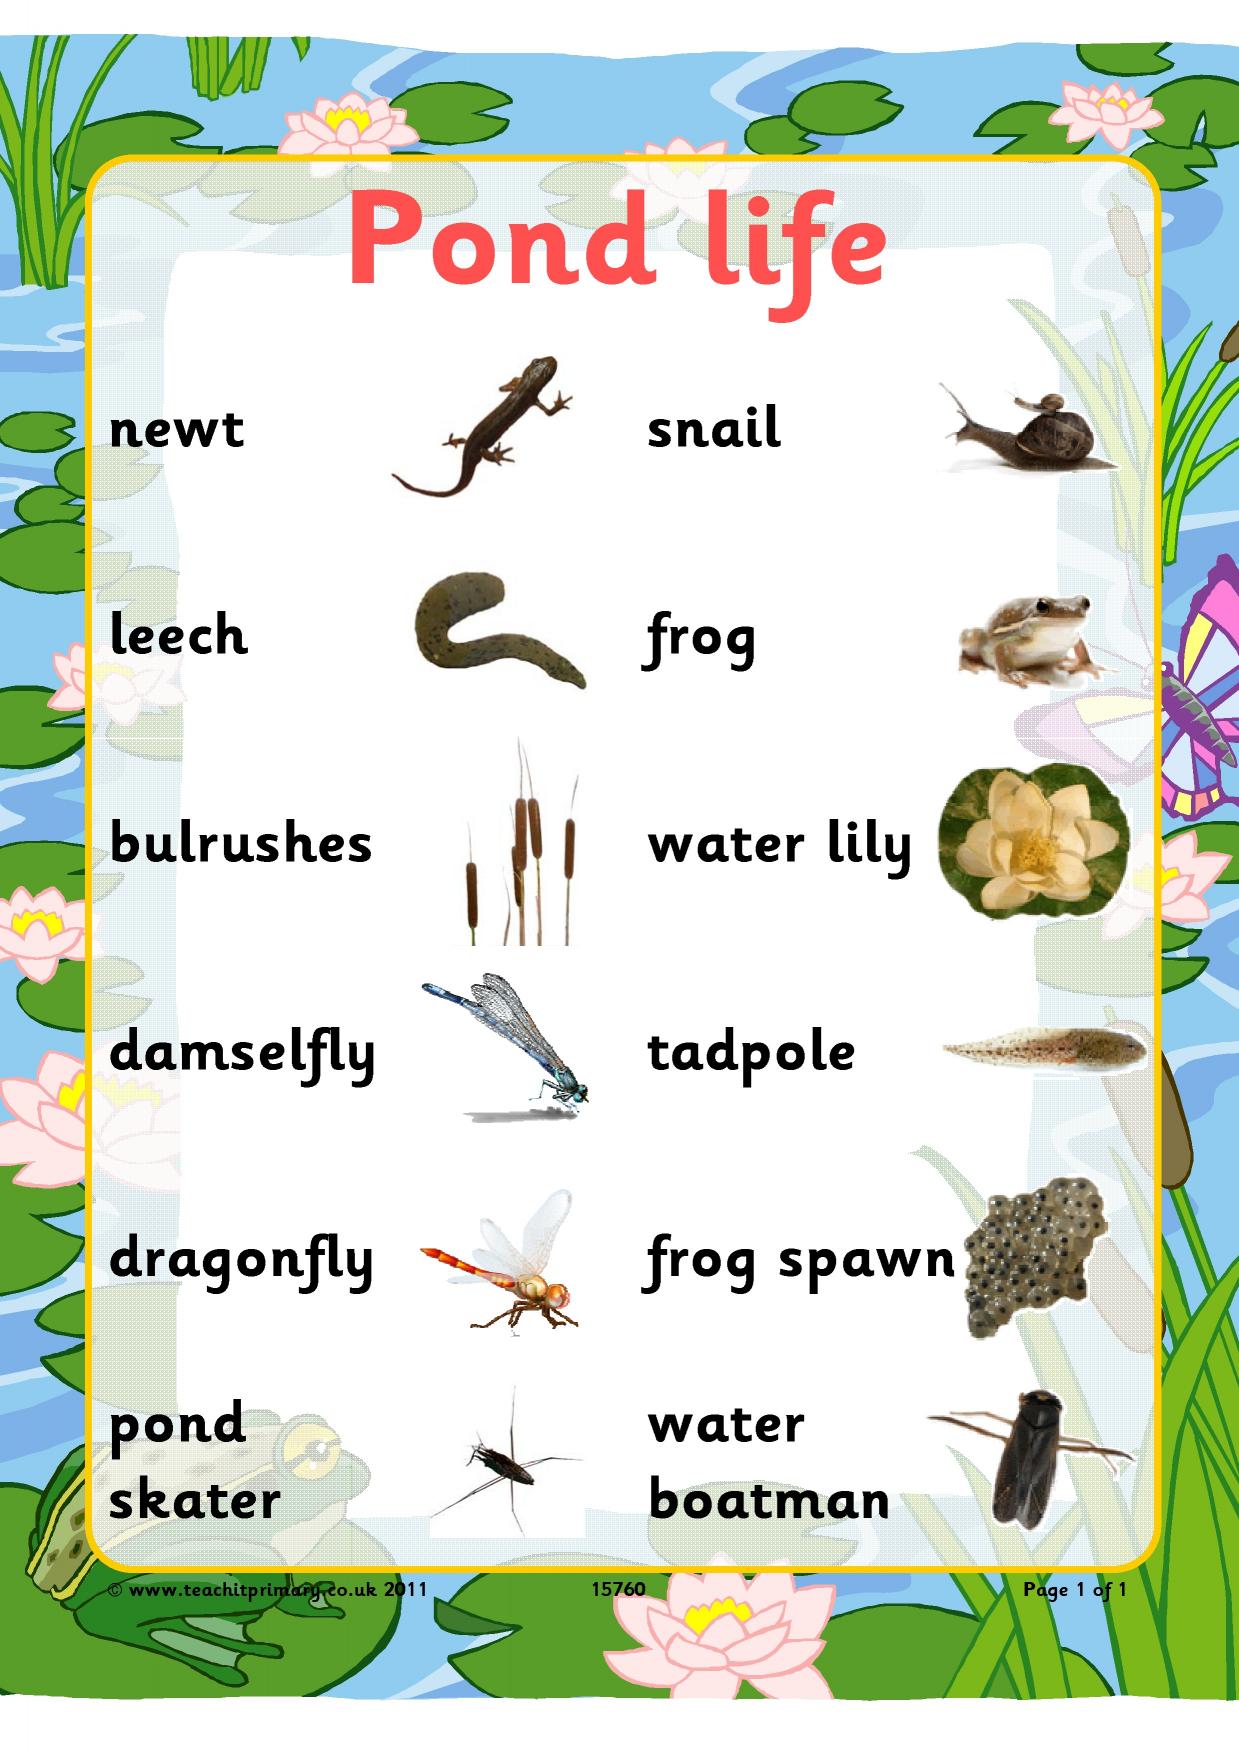 Pond life word mat | KS2 living things and their habitats | Teachit